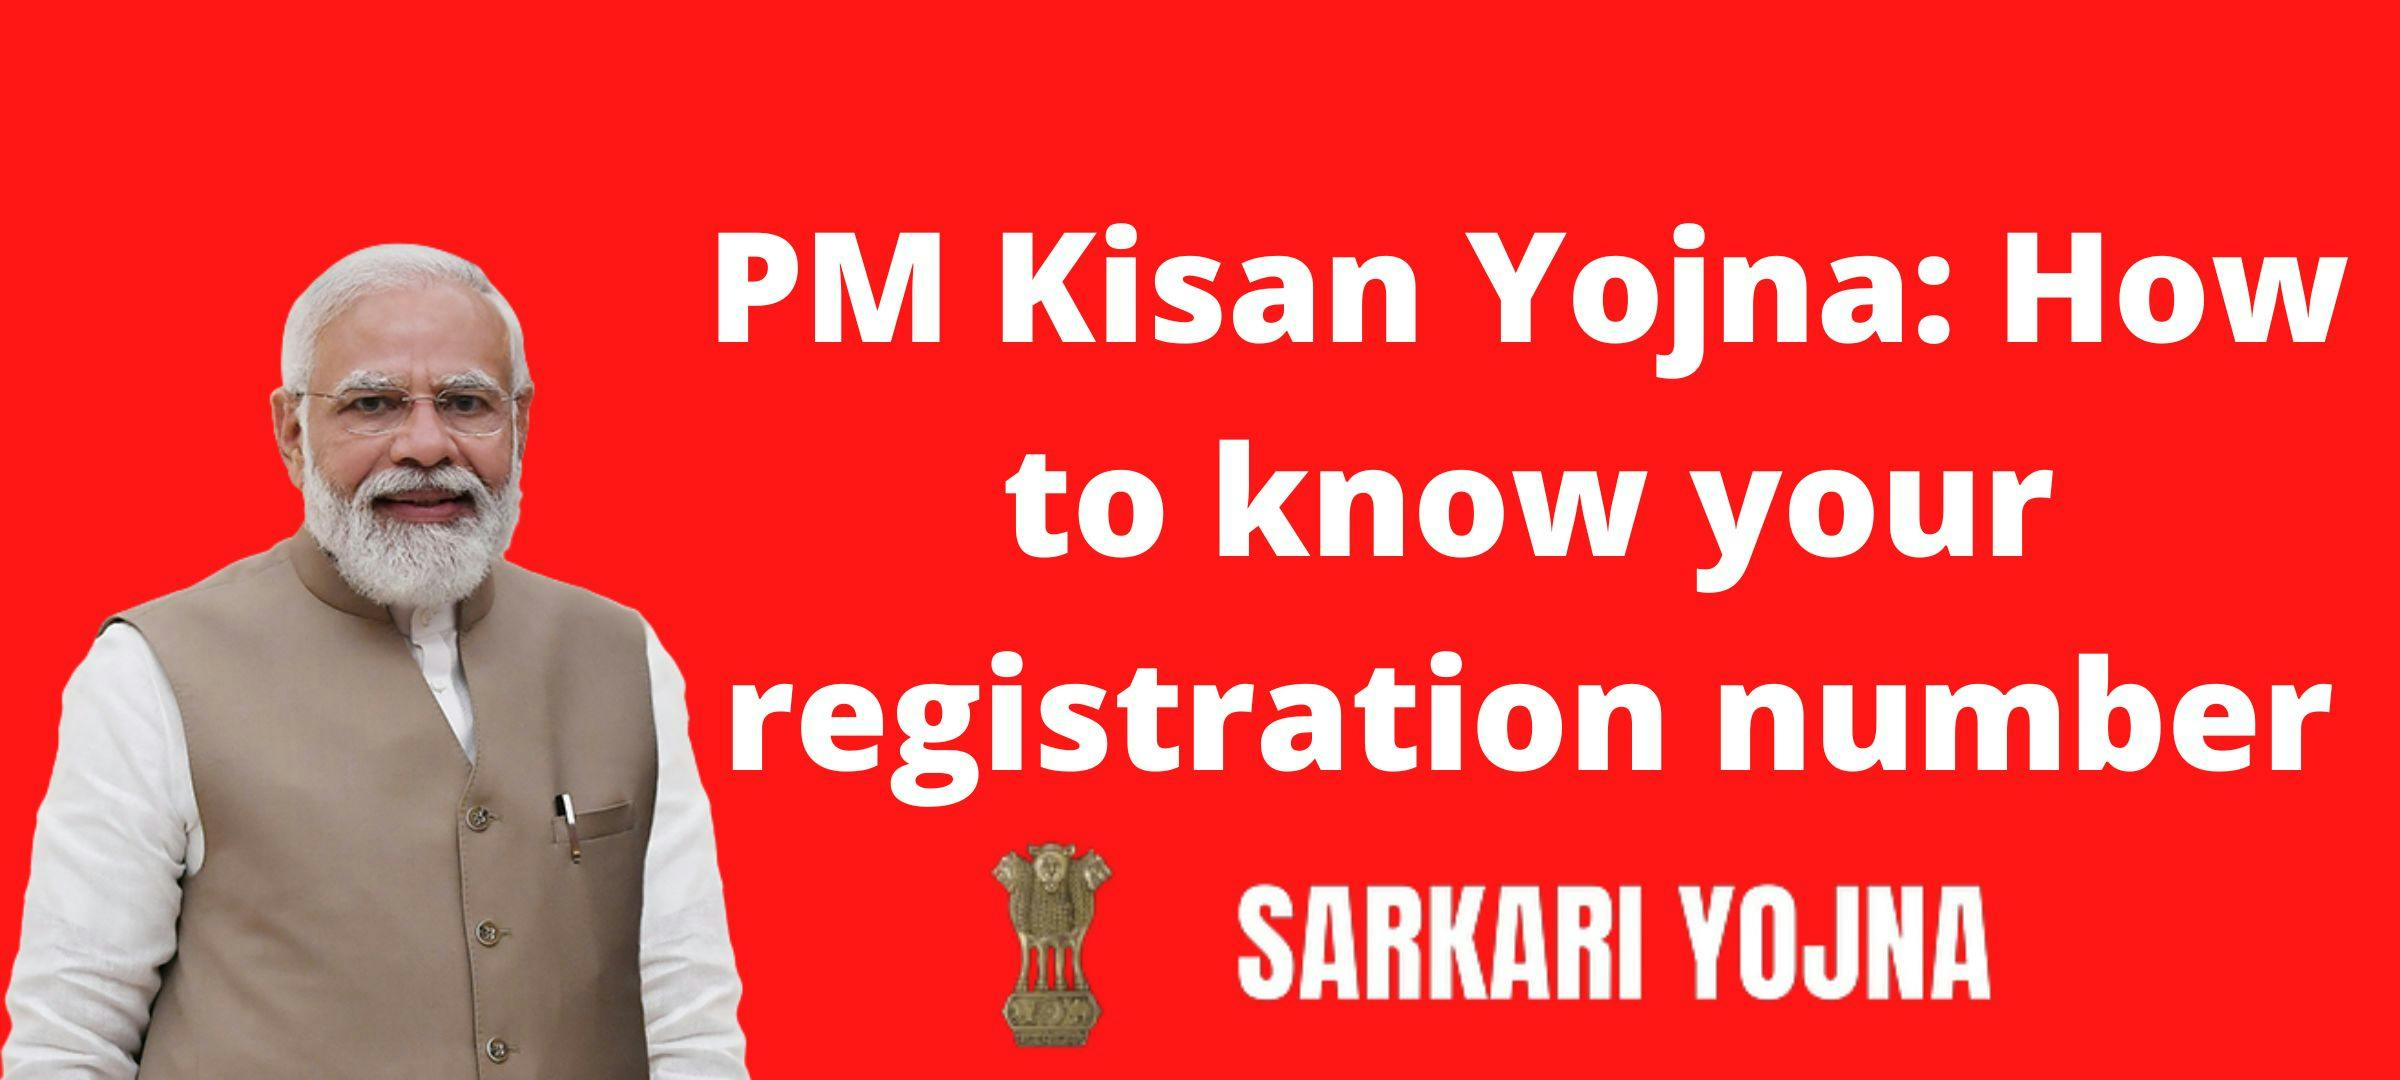 pm kisan yojna knwo registration number